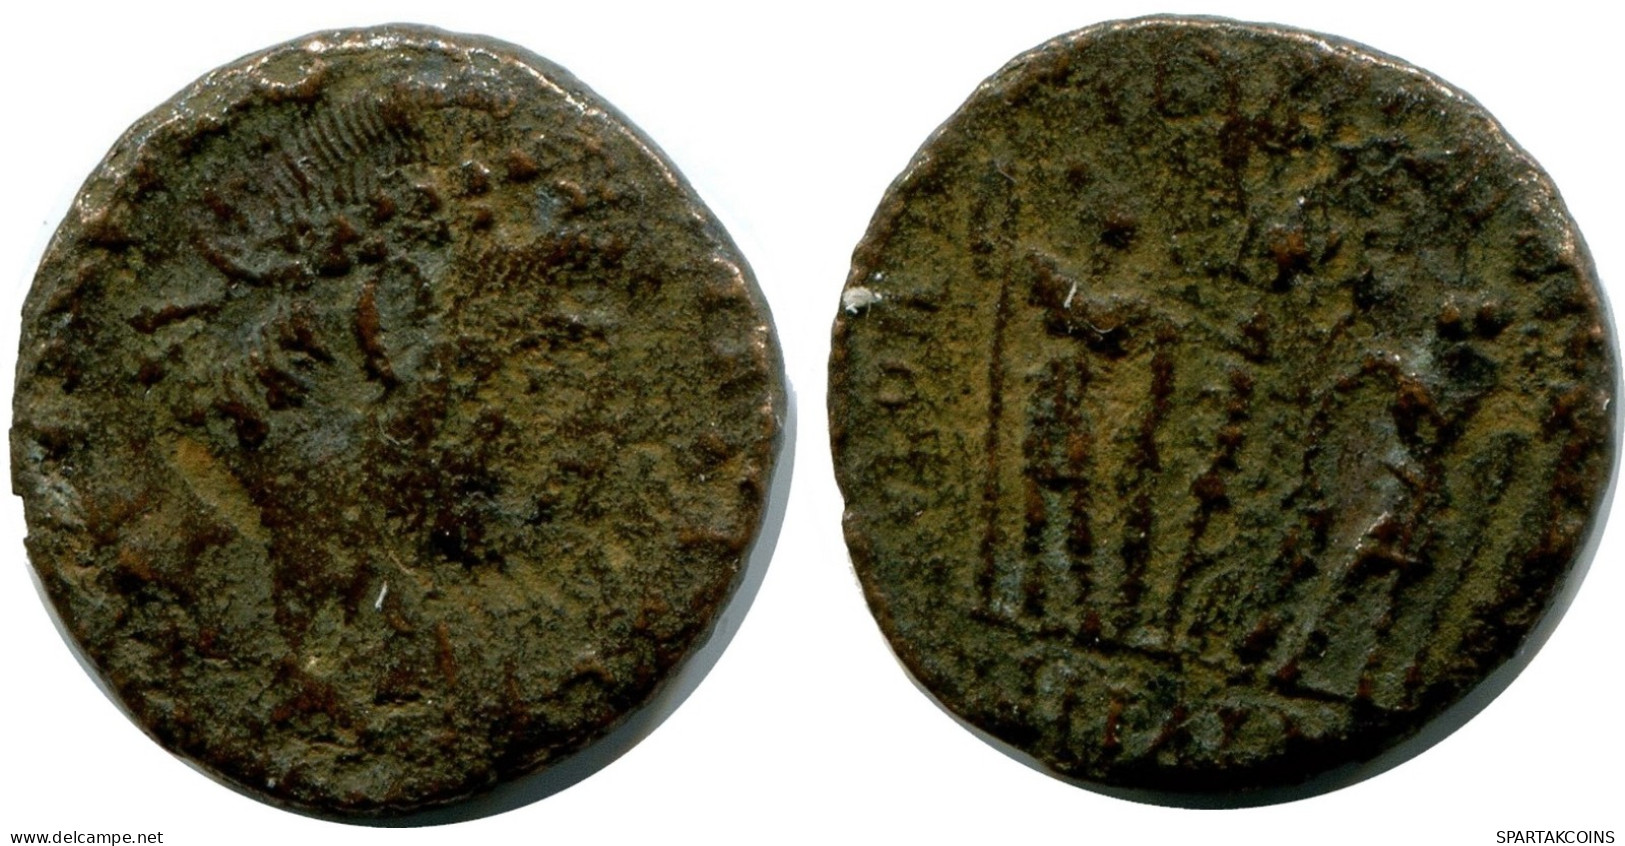 ROMAN Moneda MINTED IN ALEKSANDRIA FROM THE ROYAL ONTARIO MUSEUM #ANC10157.14.E.A - El Impero Christiano (307 / 363)